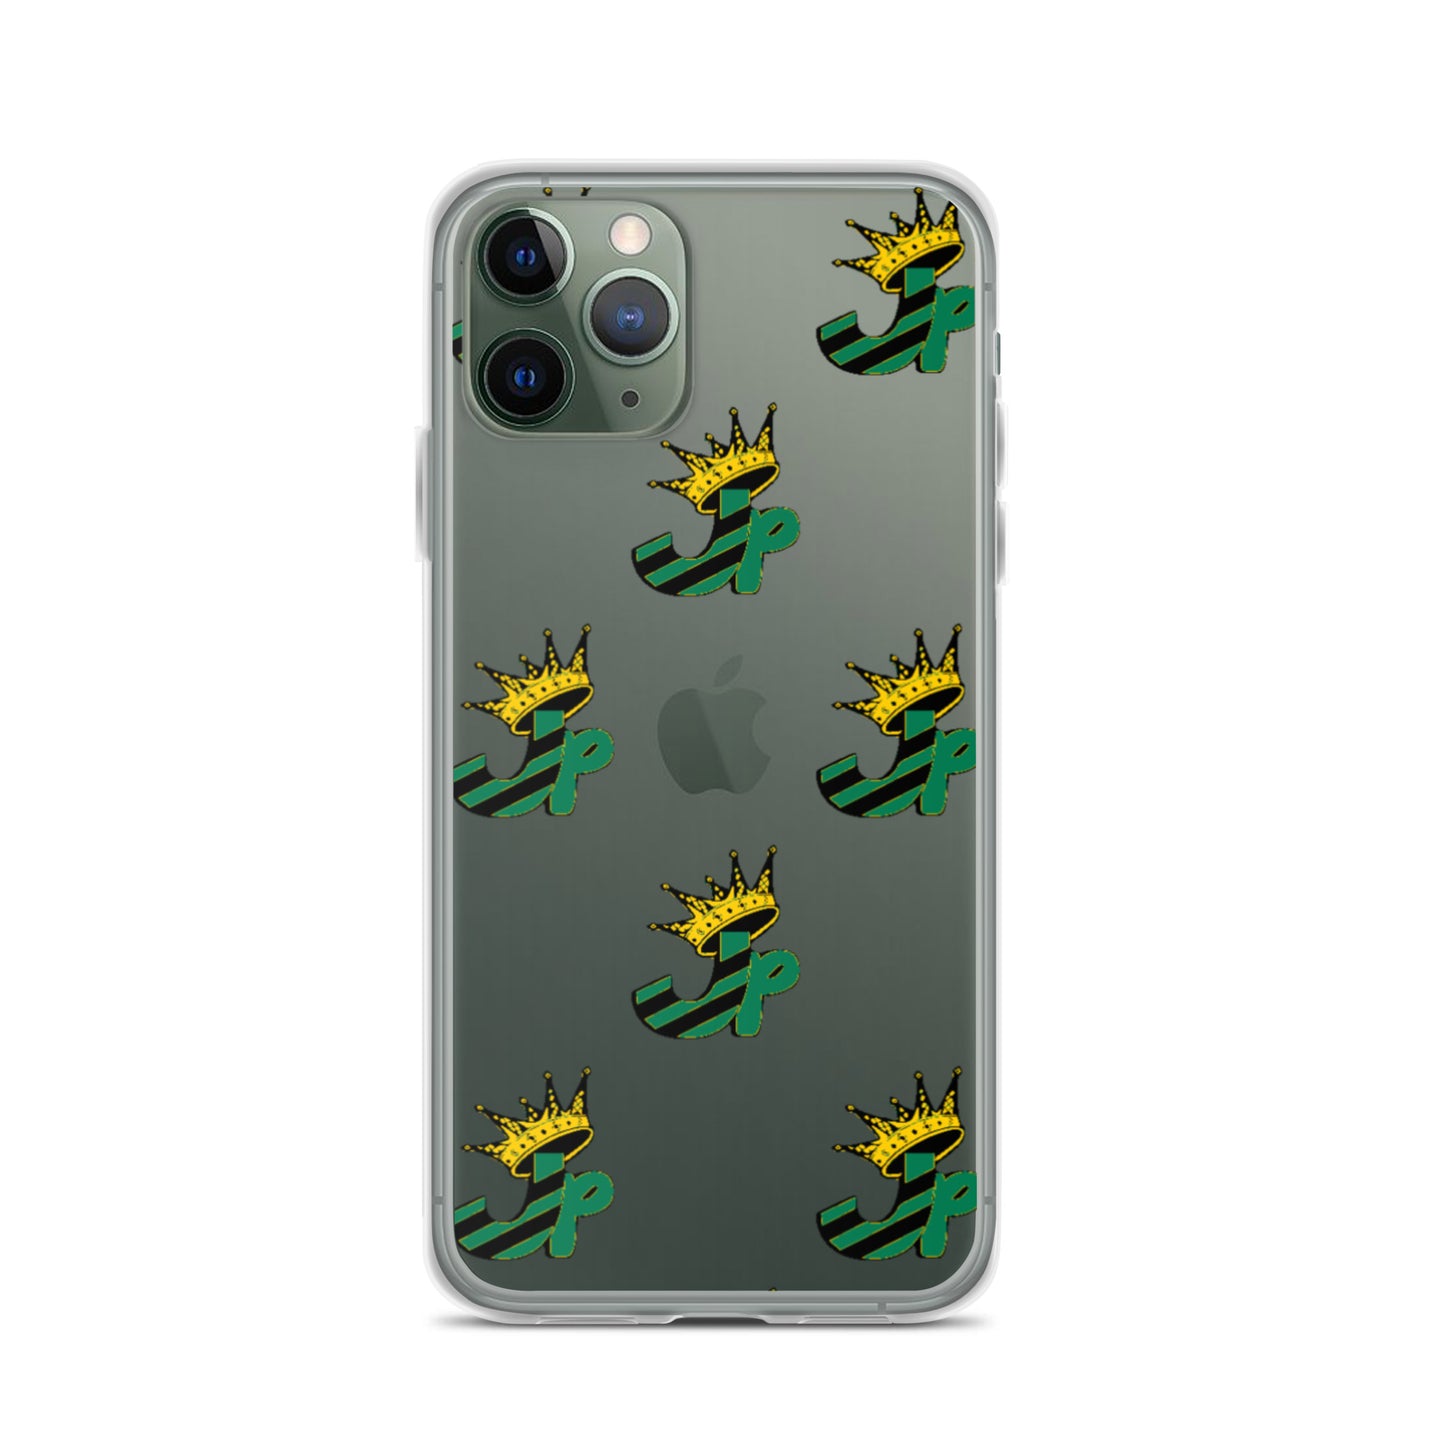 "JP" iPhone Case